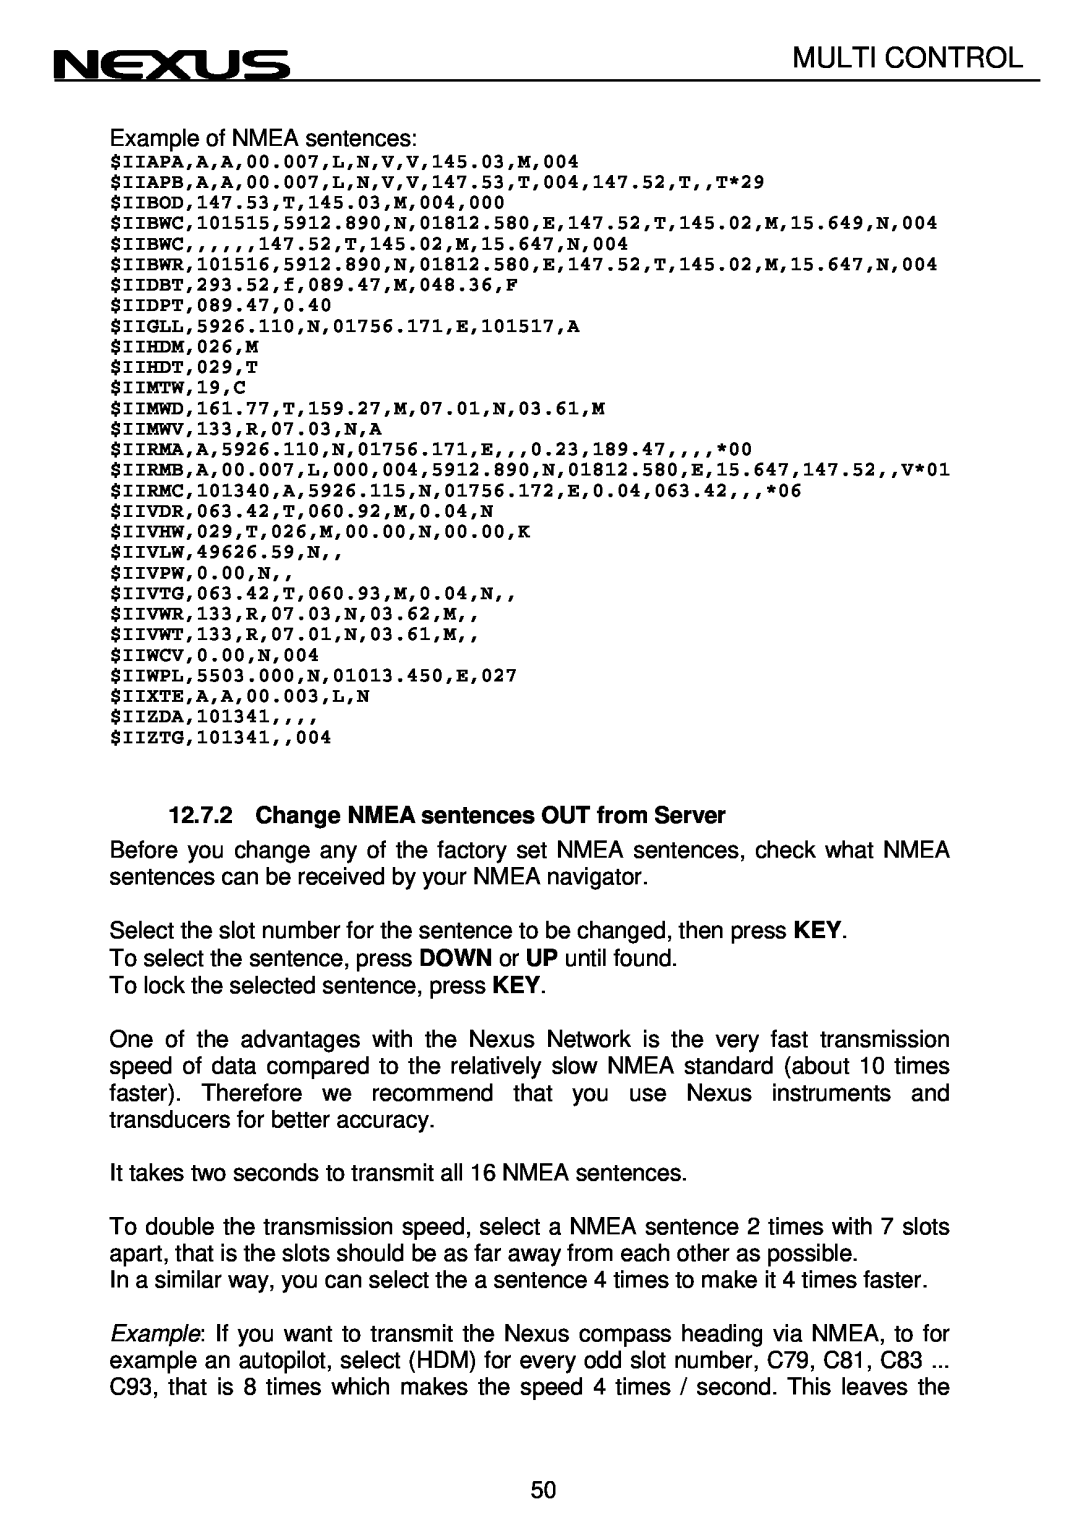 Nexus 21 Multi Control operation manual 12.7.2Change NMEA sentences OUT from Server 